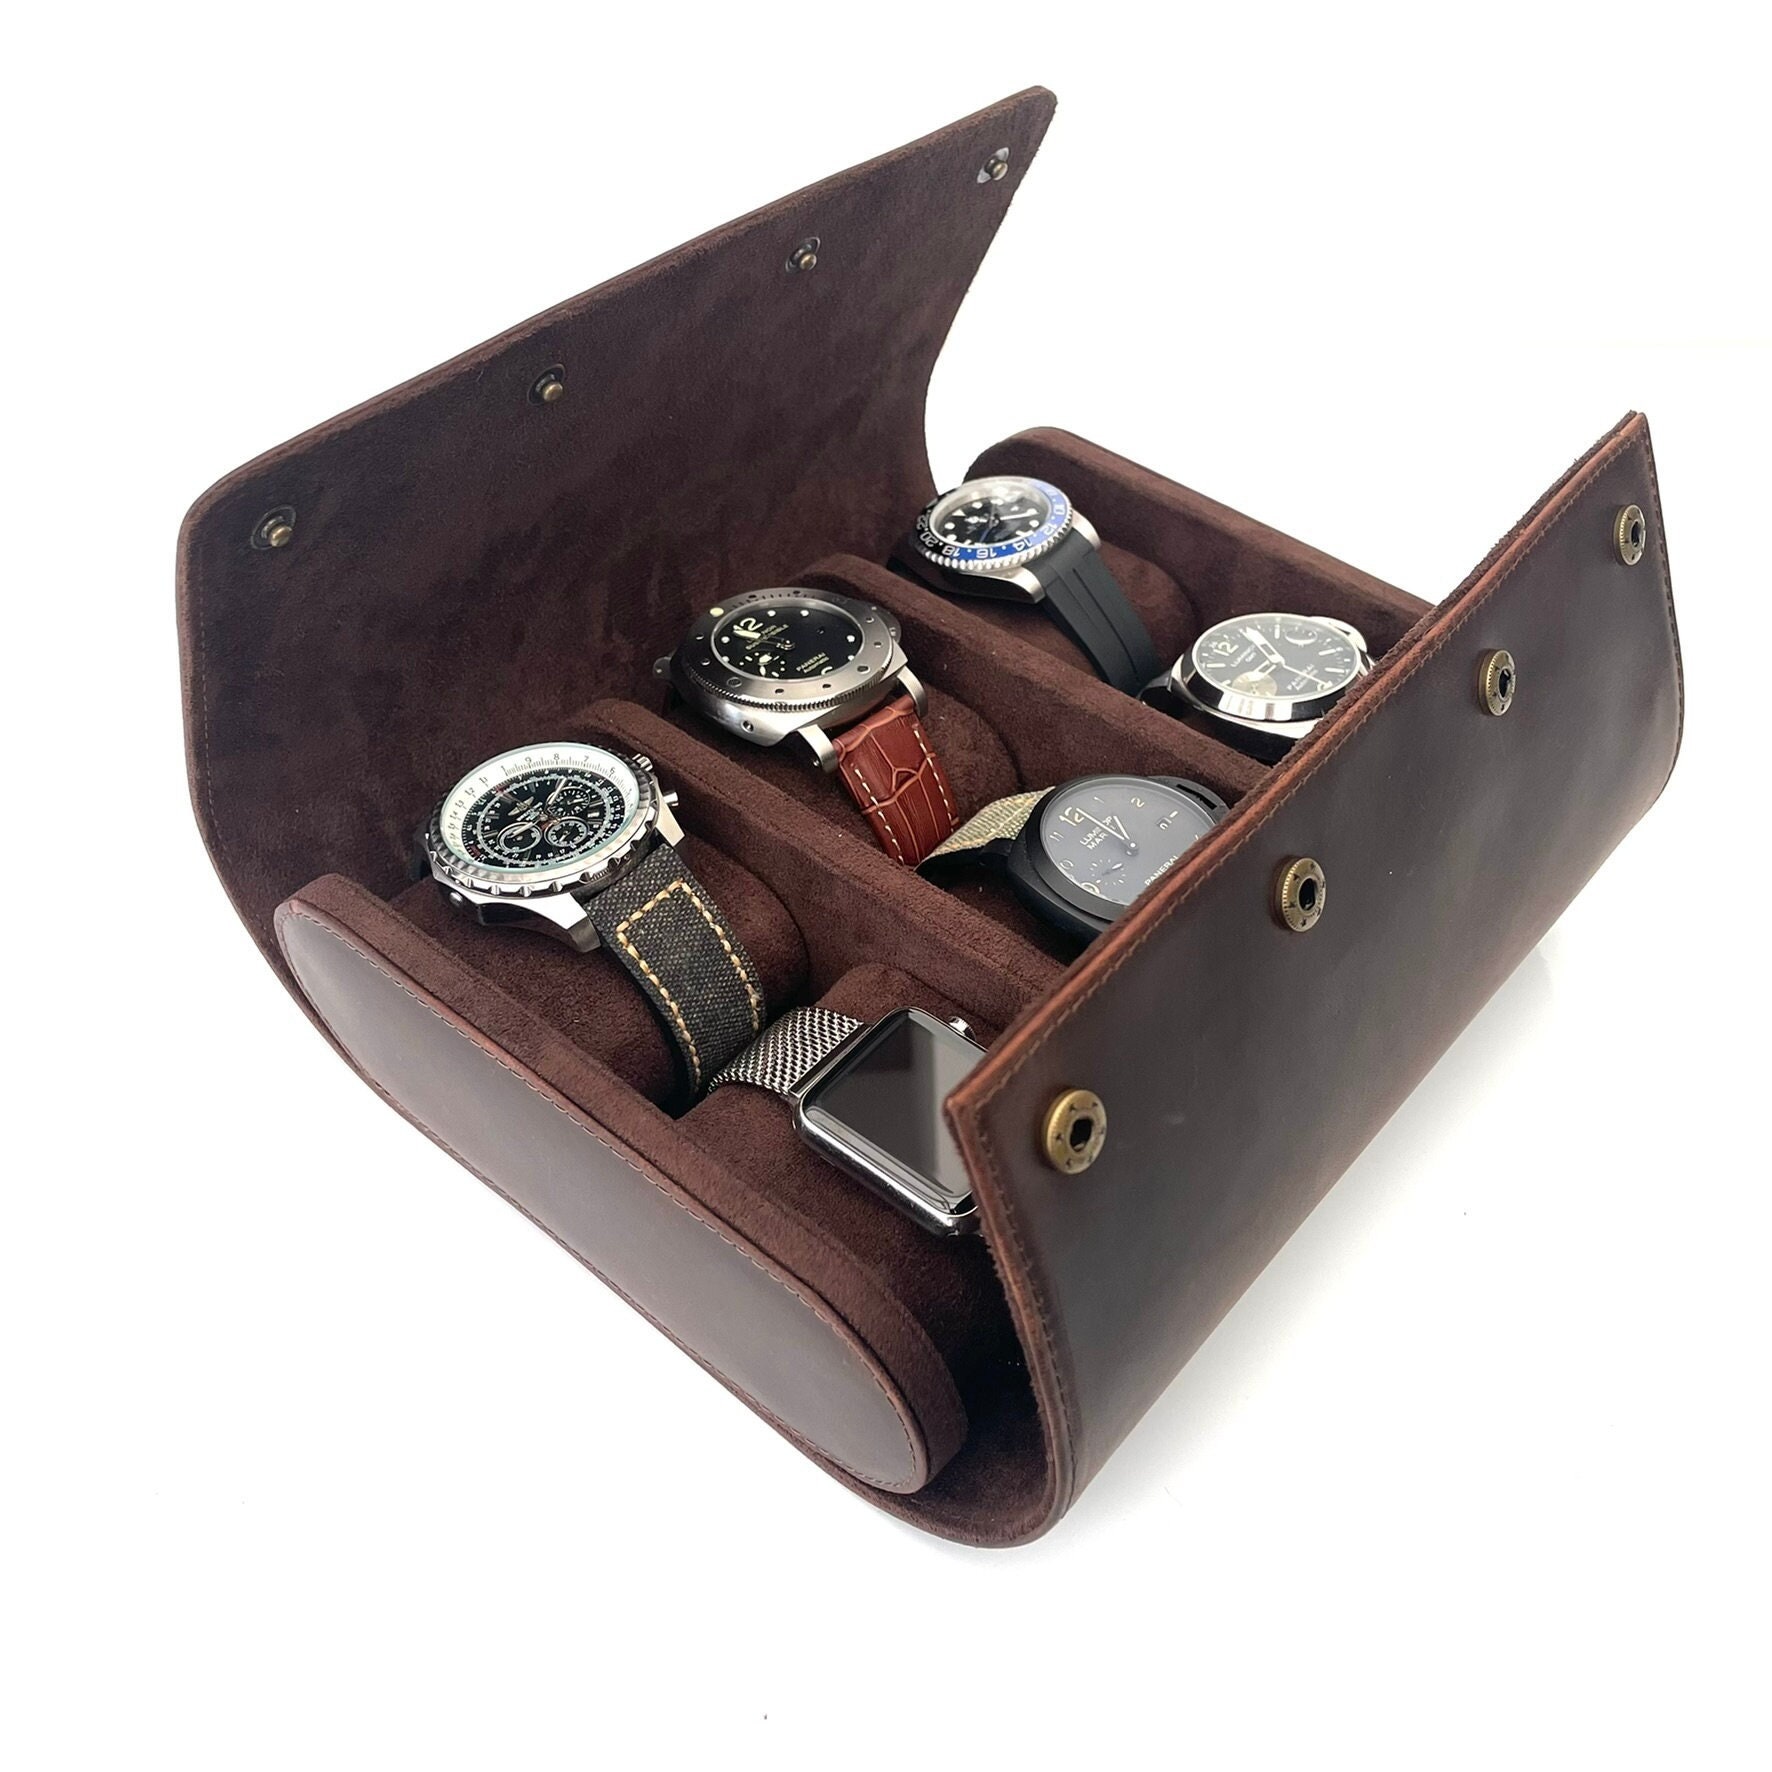 Leather Travel Watch Case - Single Watch Roll, Roarcraft